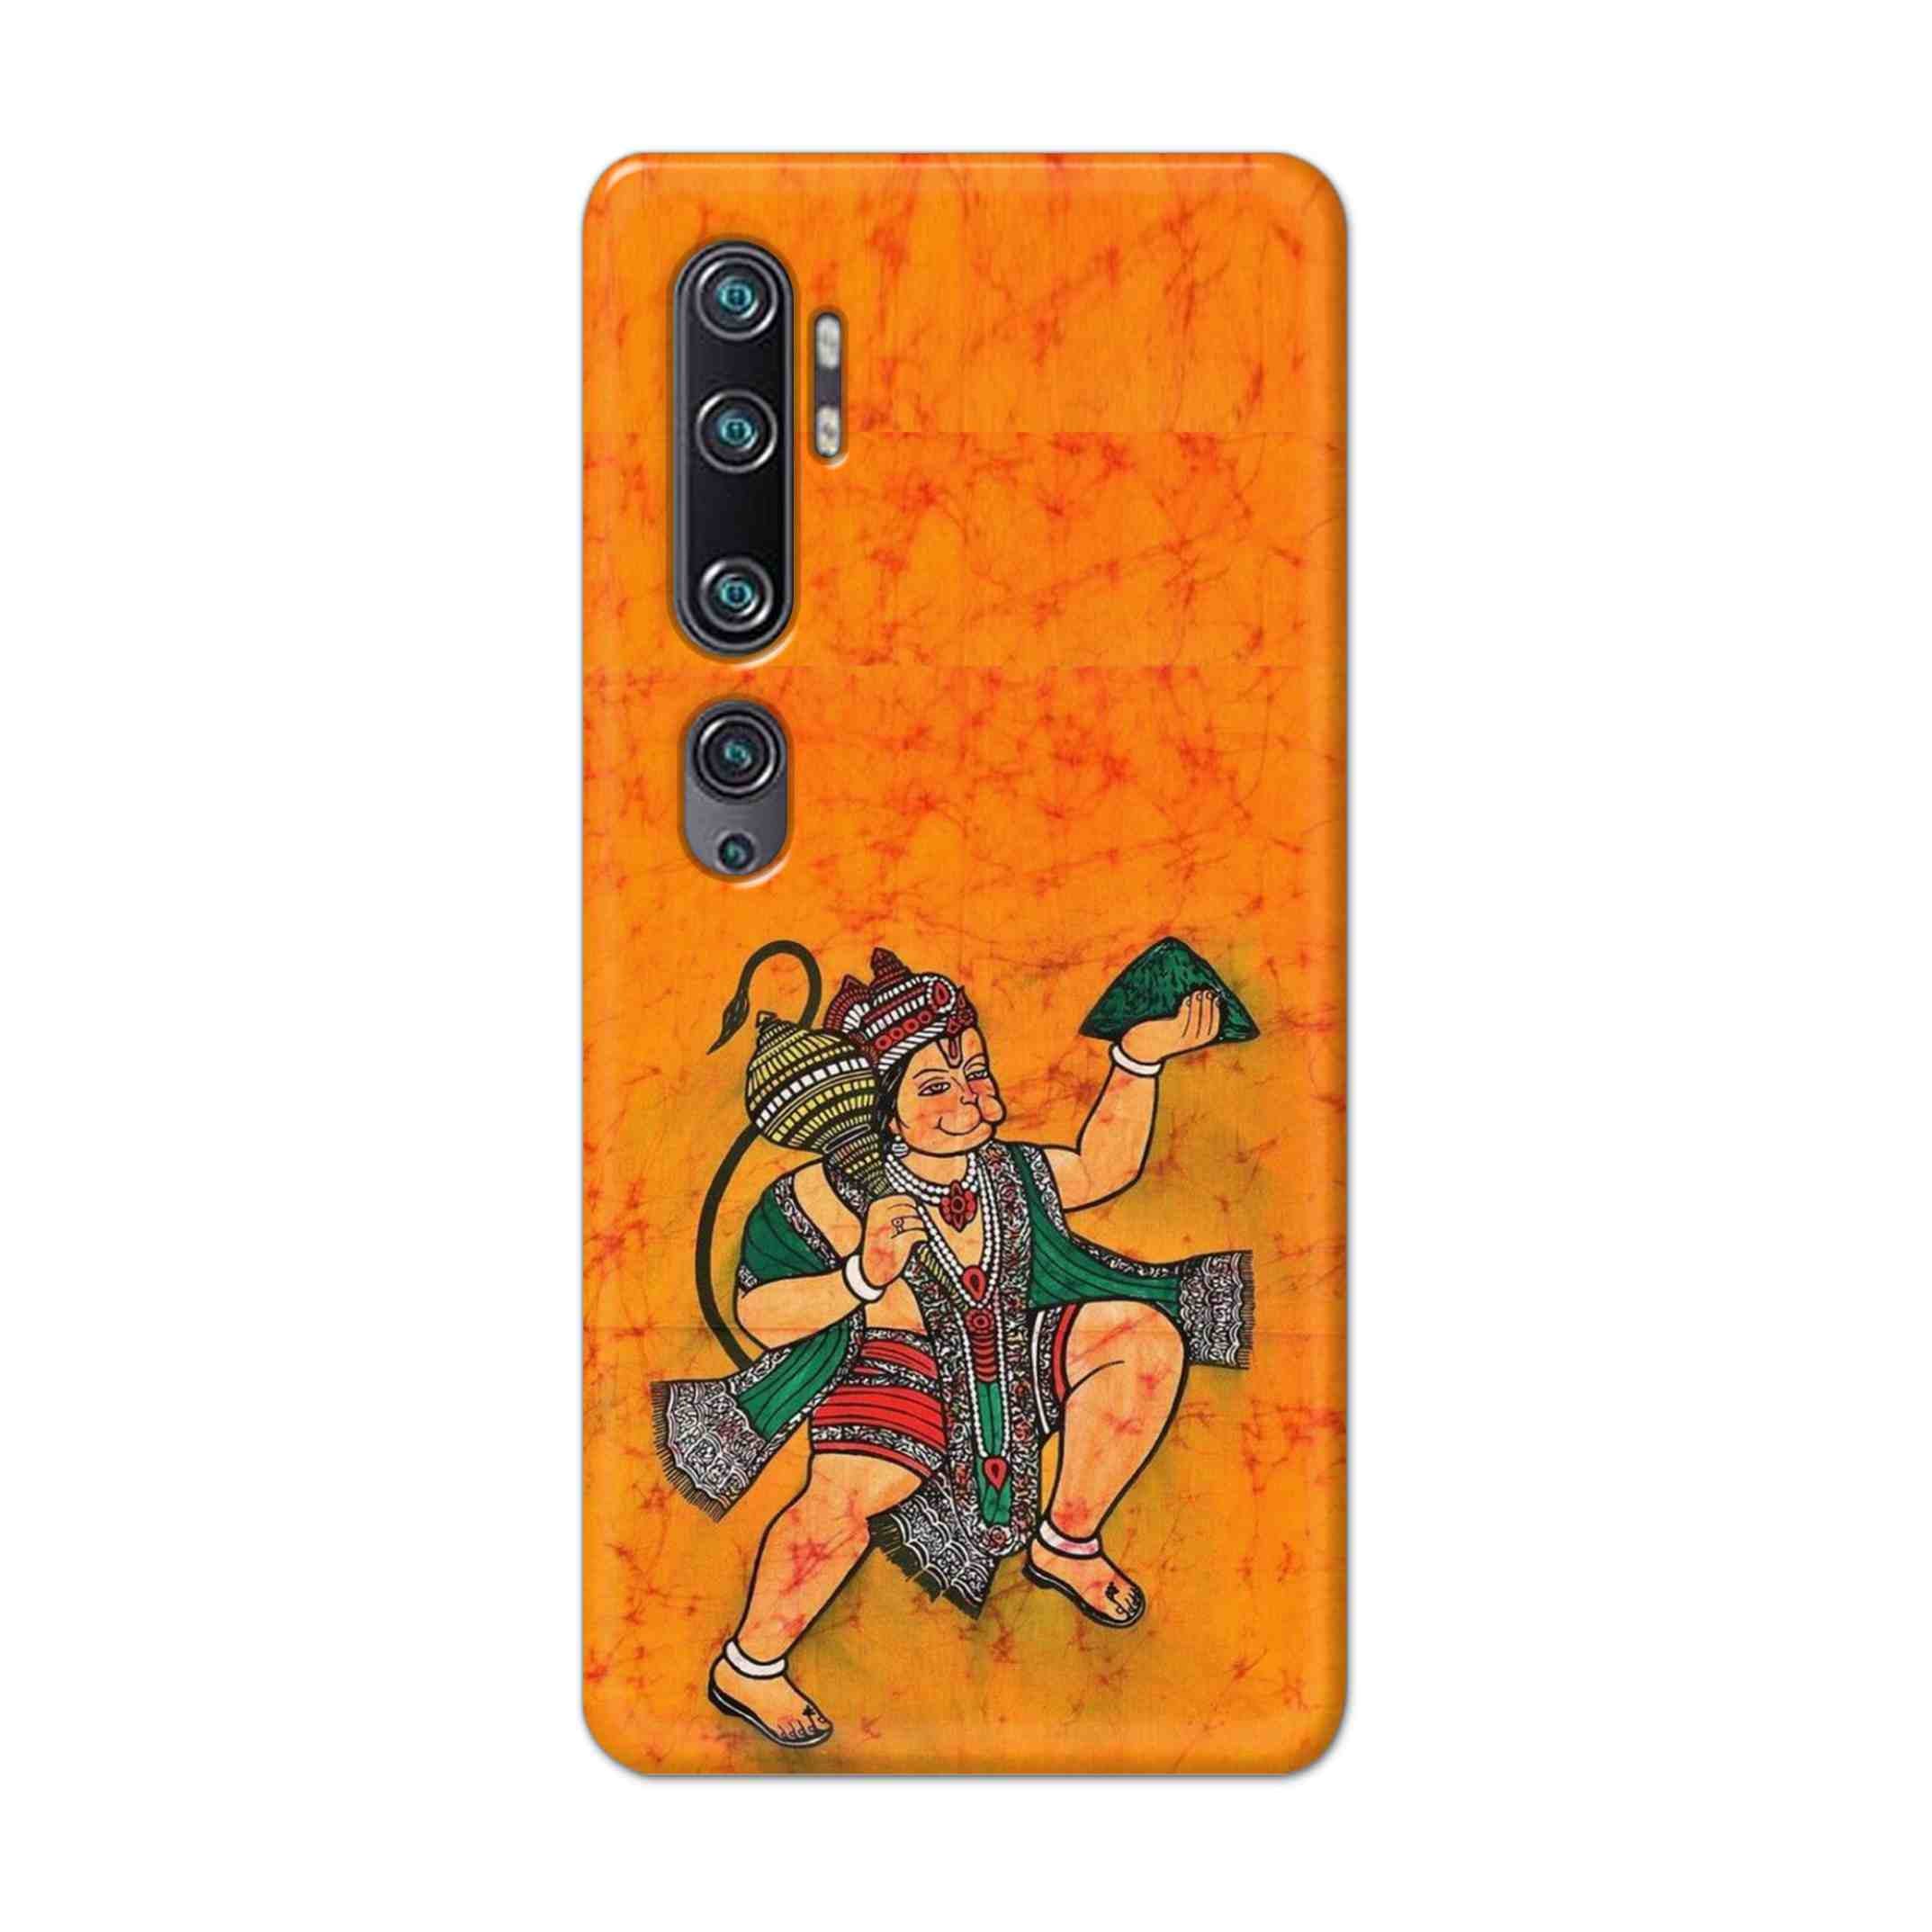 Buy Hanuman Ji Hard Back Mobile Phone Case Cover For Xiaomi Mi Note 10 Online